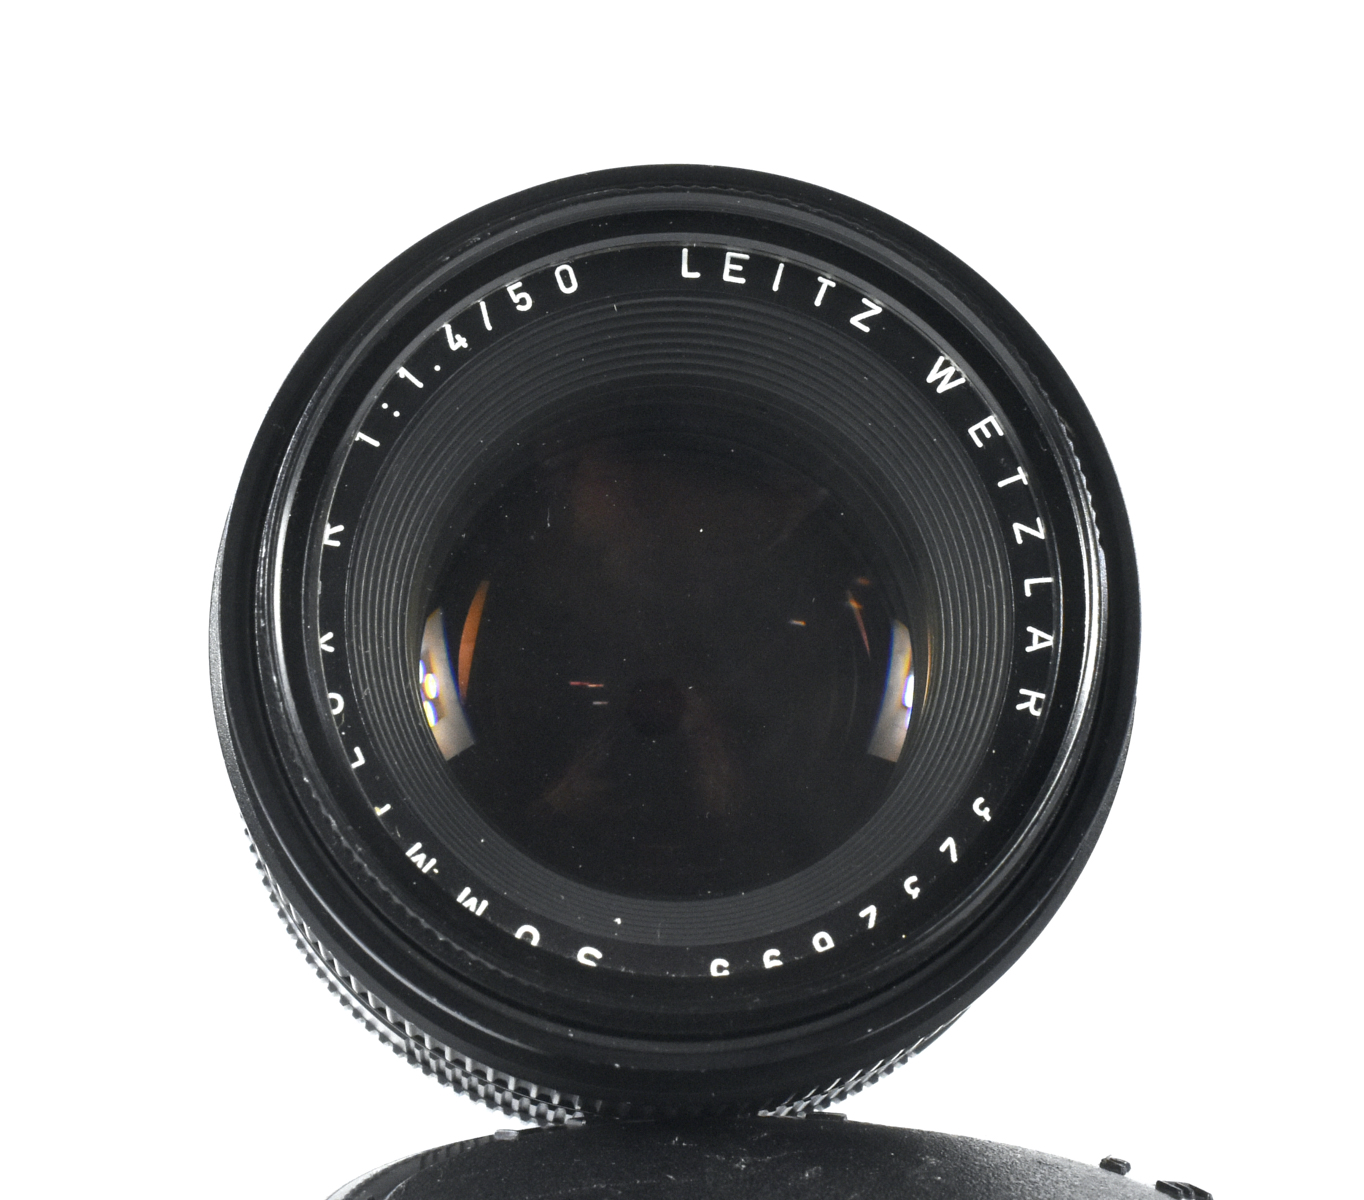 Leitz SummiLux-R 1:1.4/50 Camera Lens with B+W Polarizing Filter - Image 2 of 9